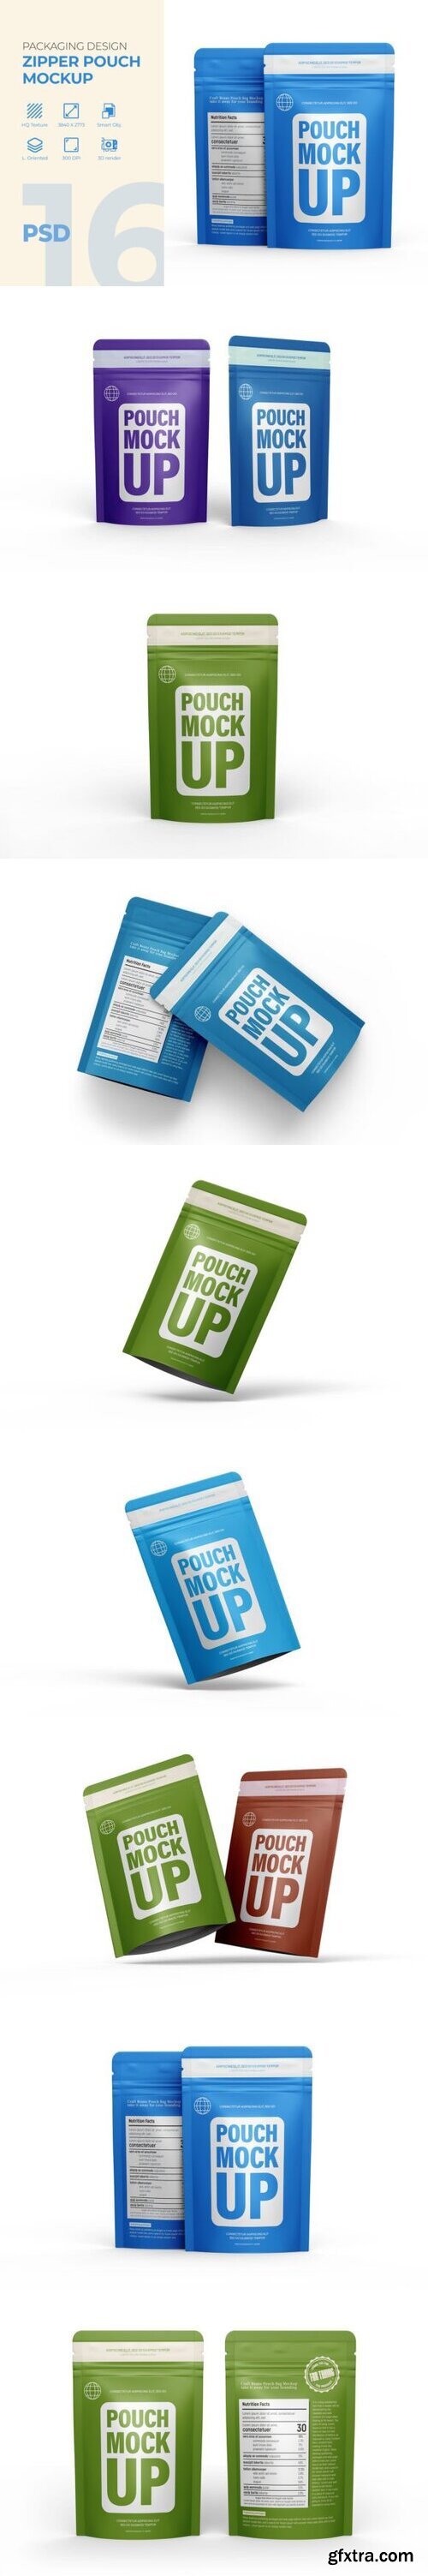 Zipper Pouch Packaging Design Mockup